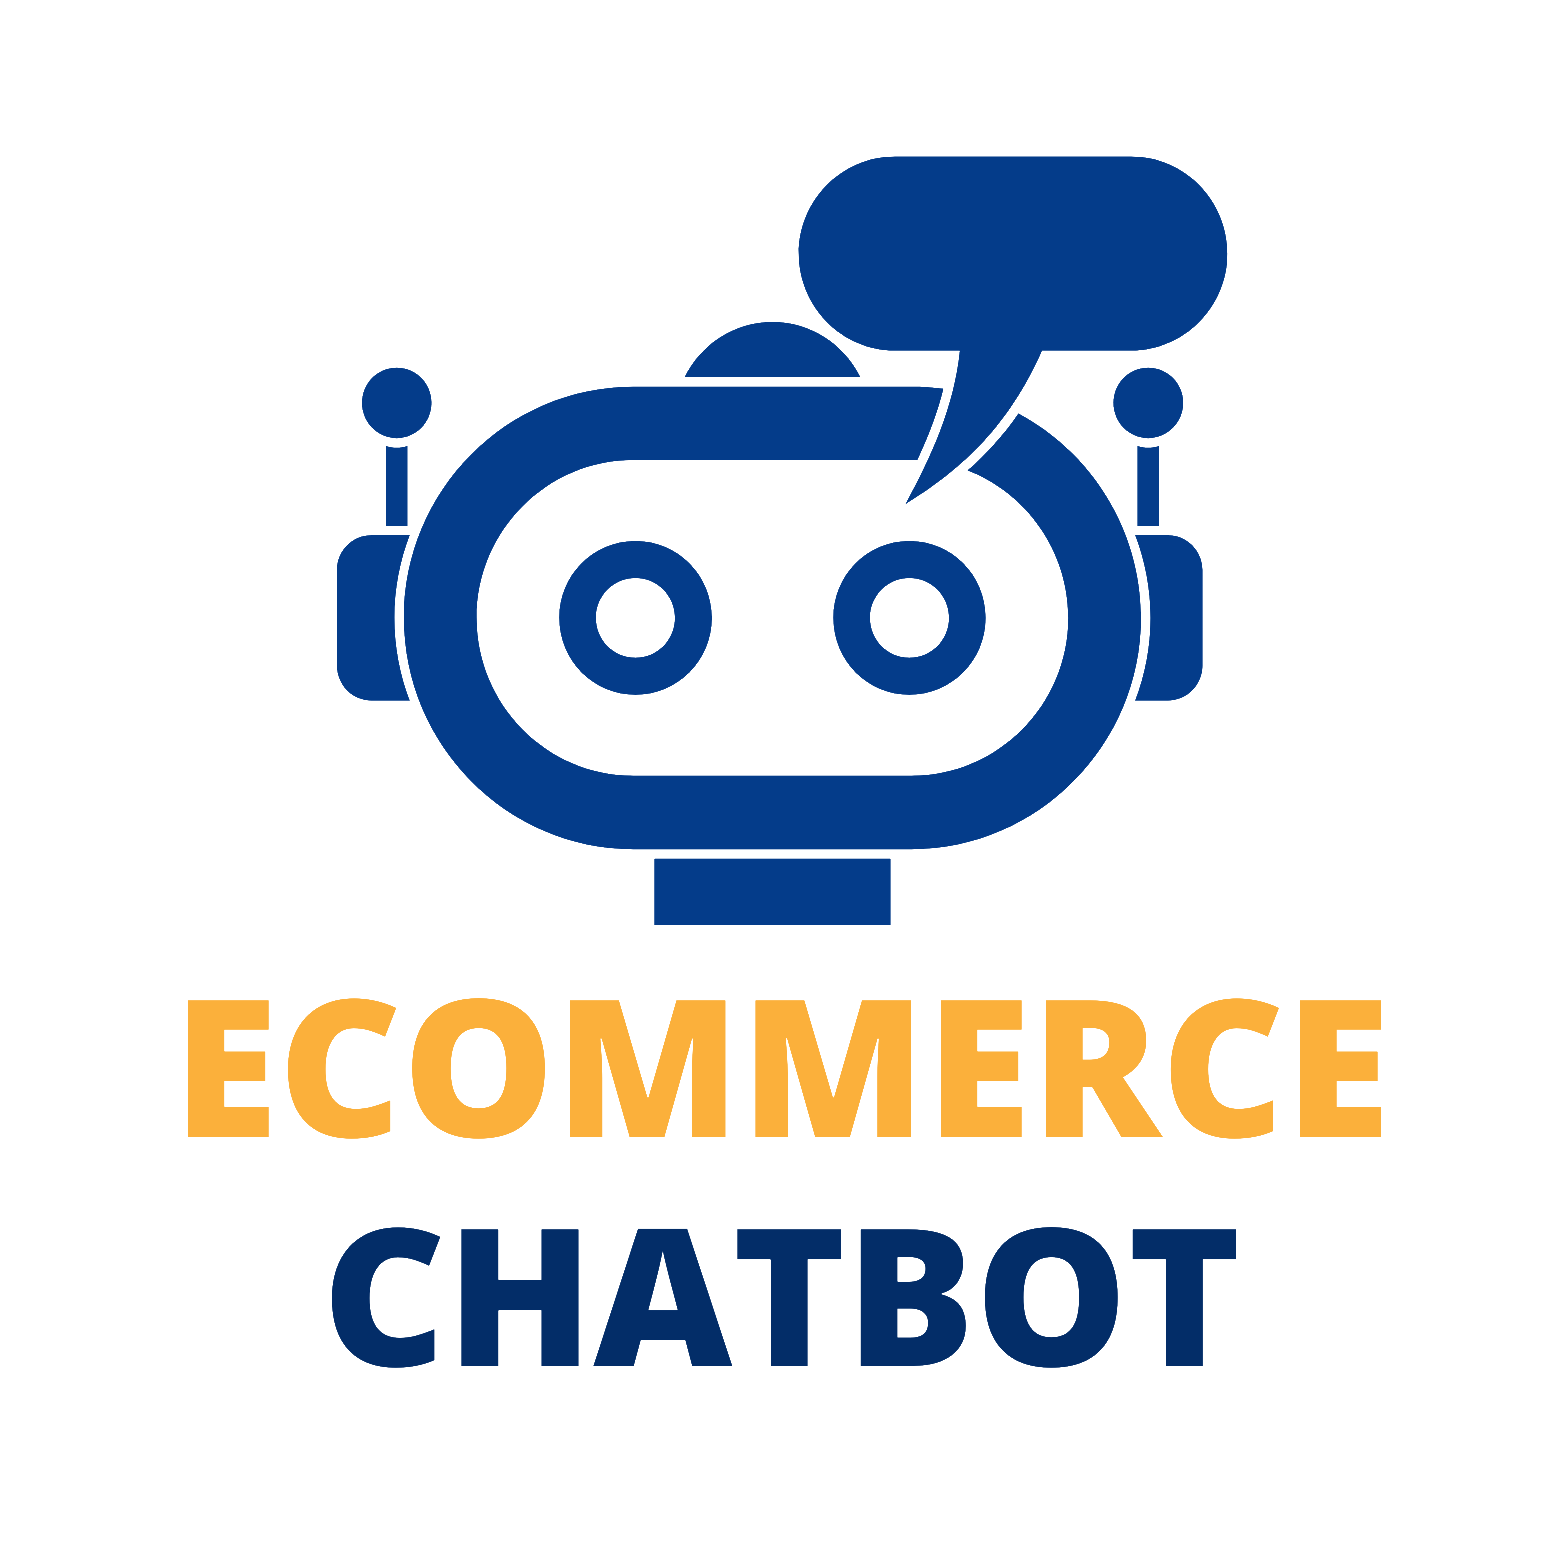 Ecommerce Chatbot